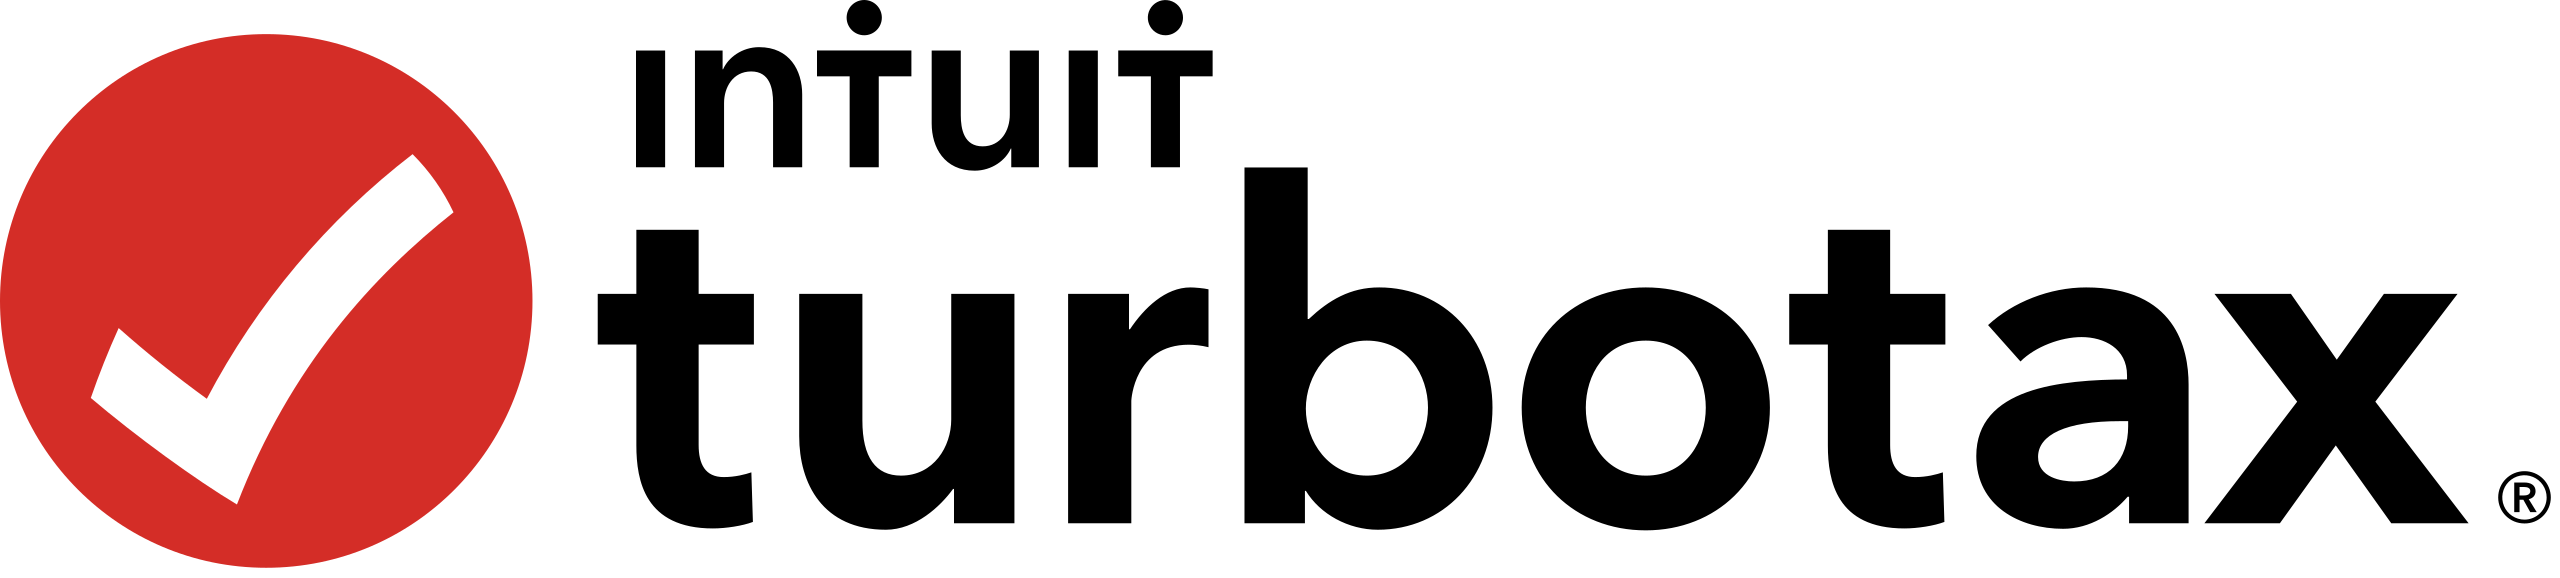 Turbotax_logo.svg